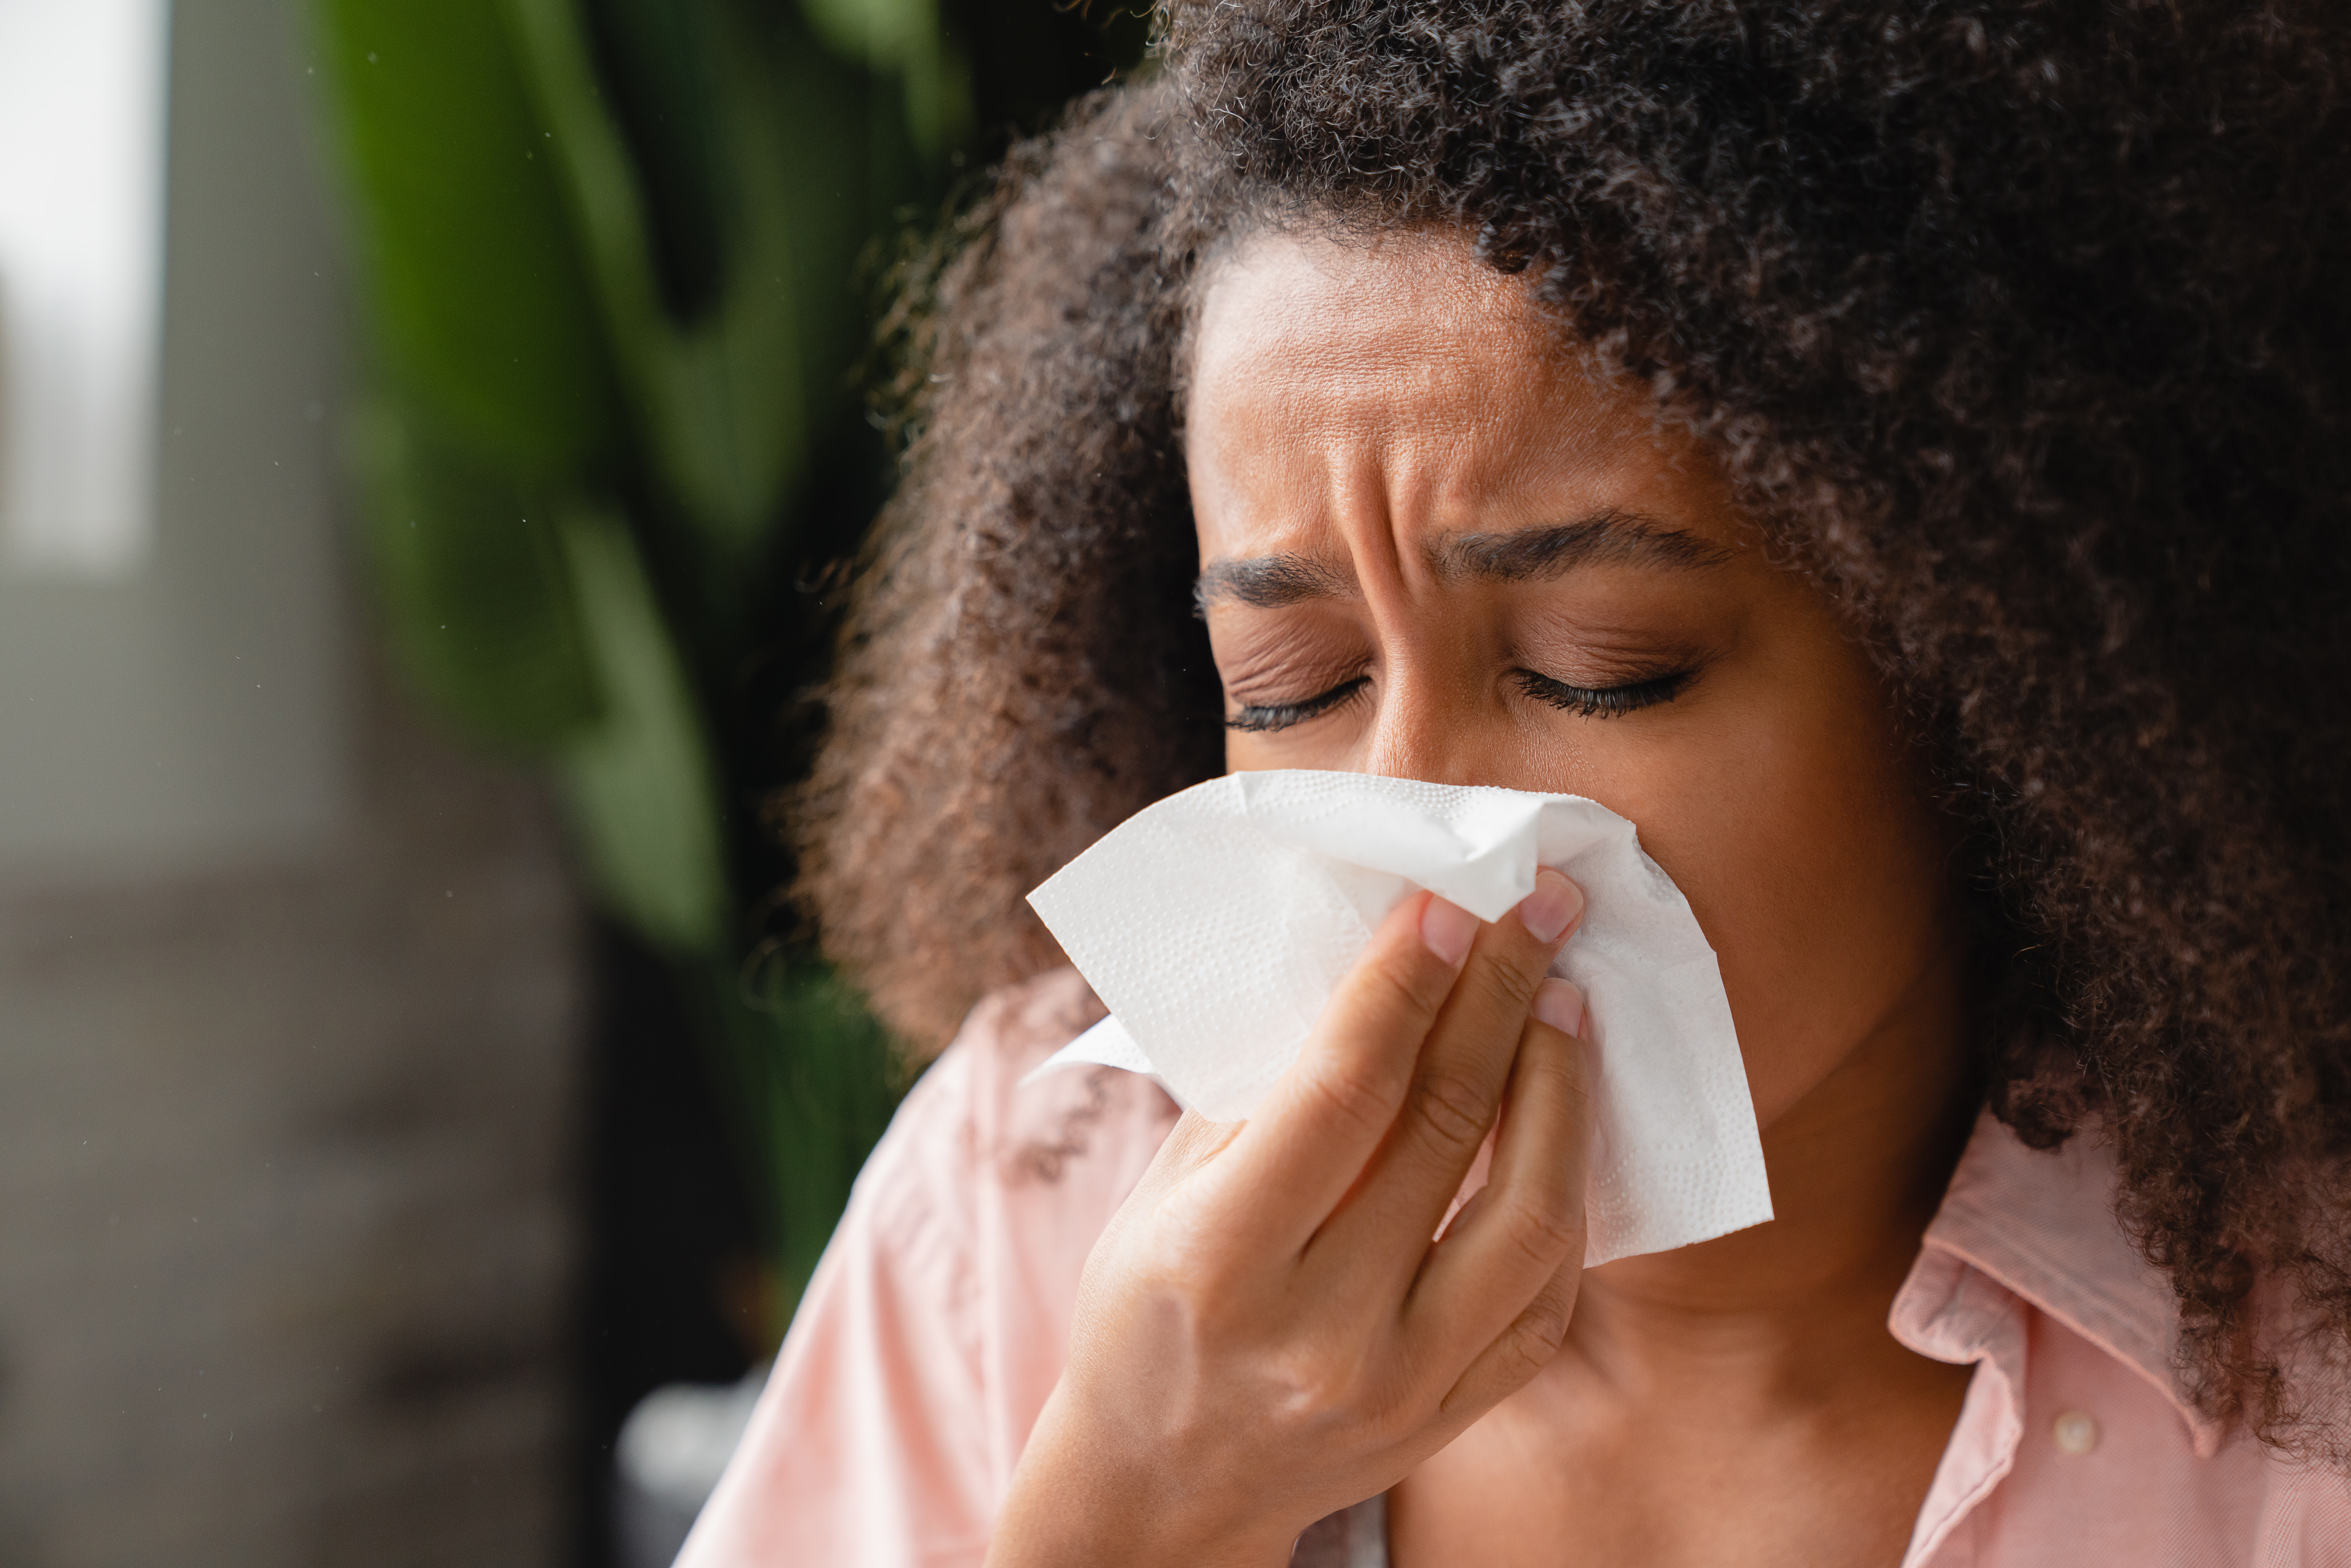 sneezing coughing ill woman using paper napkin ha 2022 01 21 19 26 30 utc